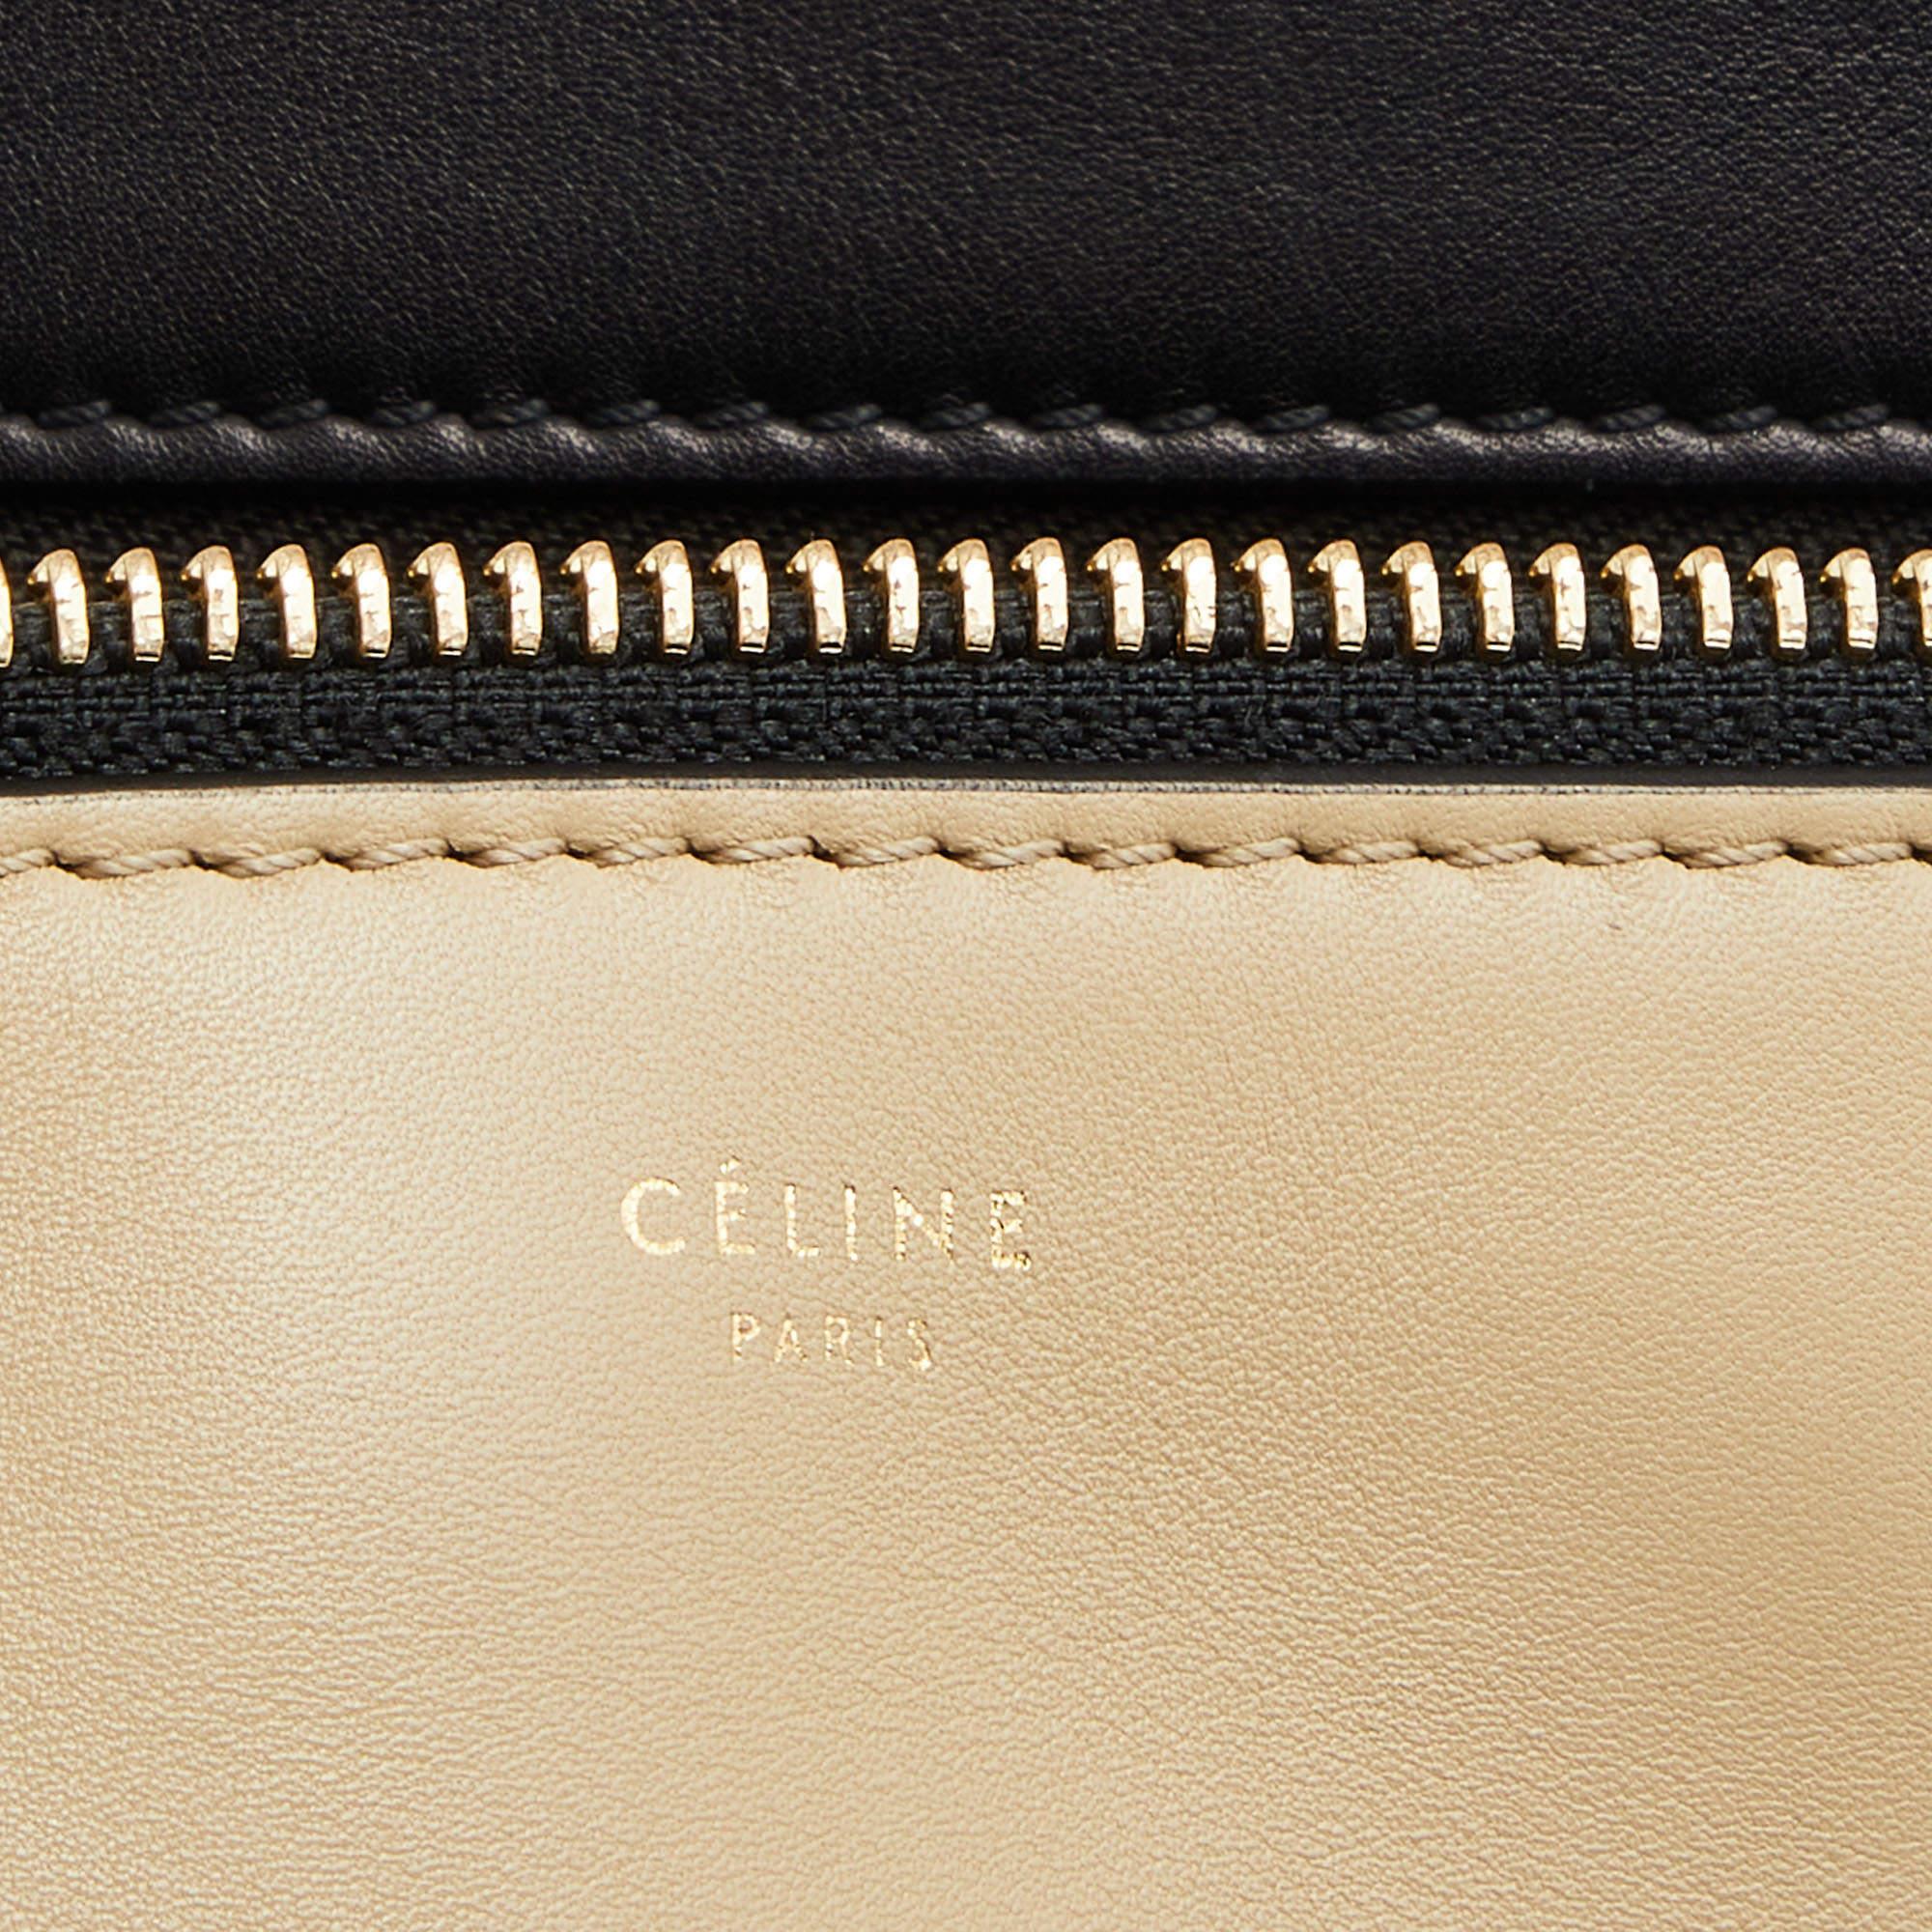 Celine Black/Beige Leather Medium Edge Top Handle Bag 6